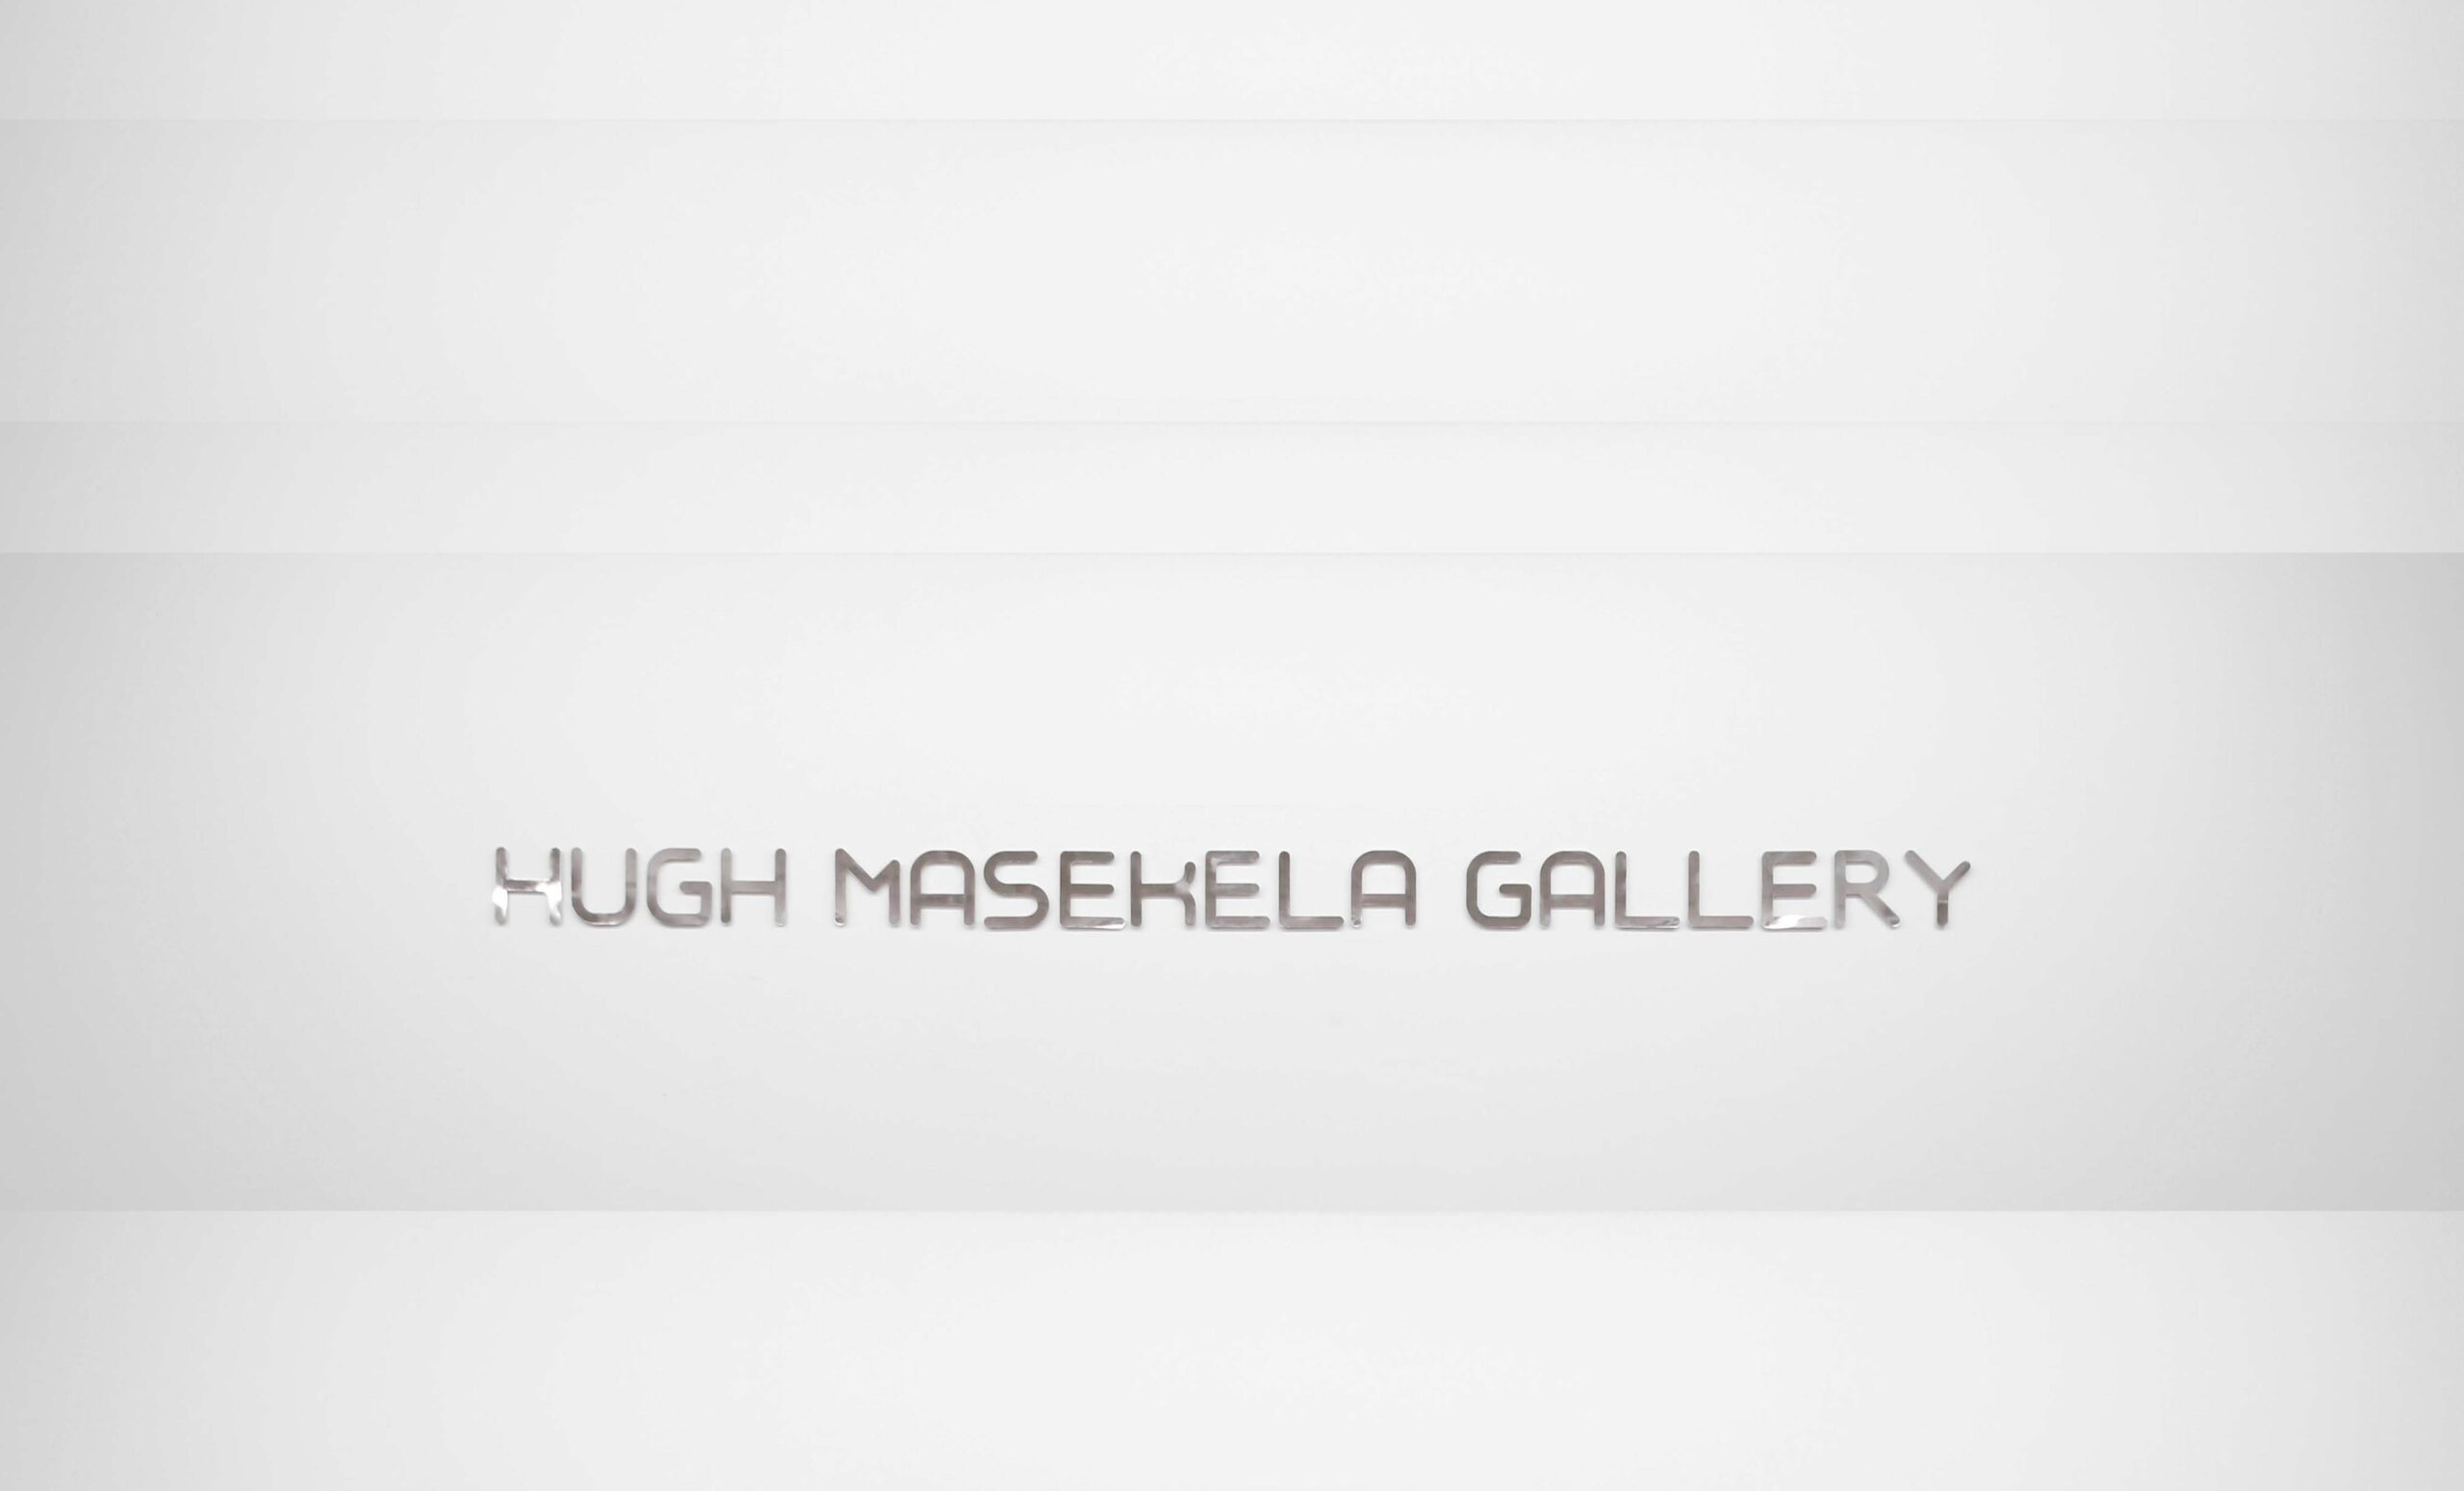 Zeitz MOCAA and Design Indaba announce gallery dedicated to the late great Hugh Masekela